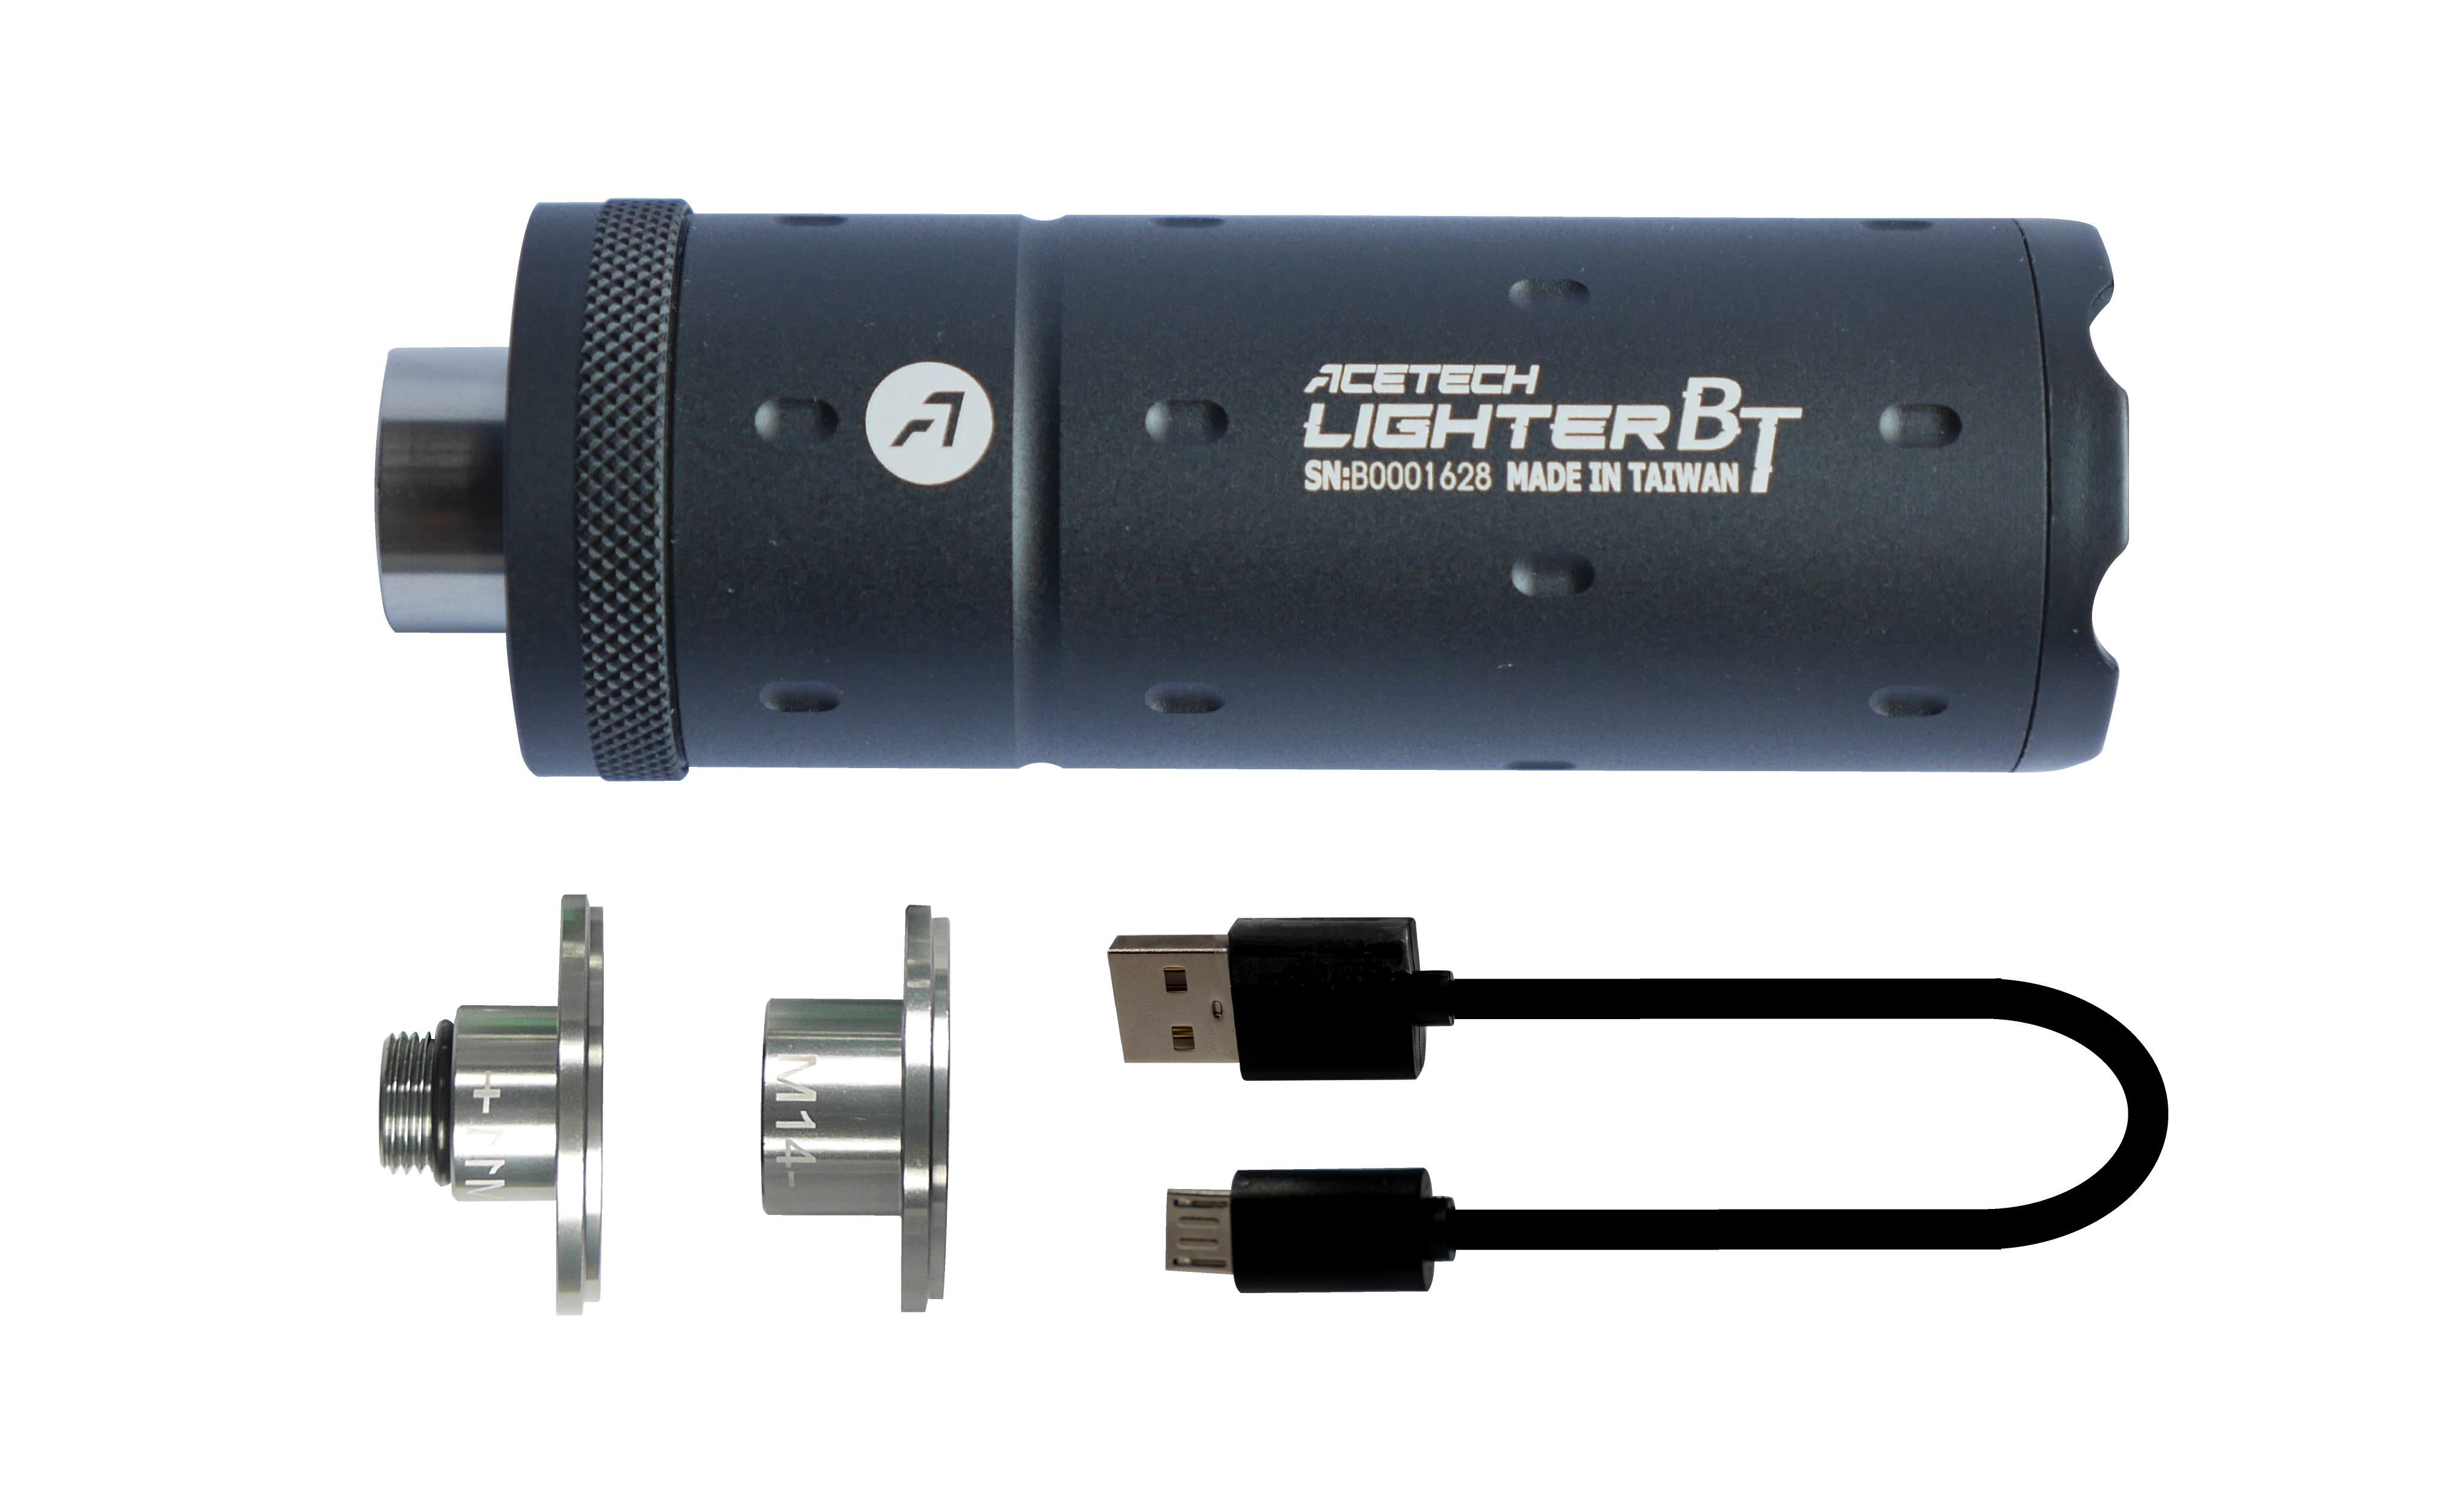 人気絶頂 Acetech Lighter BT (Black) 1年間保証 日本語説明書付の通販